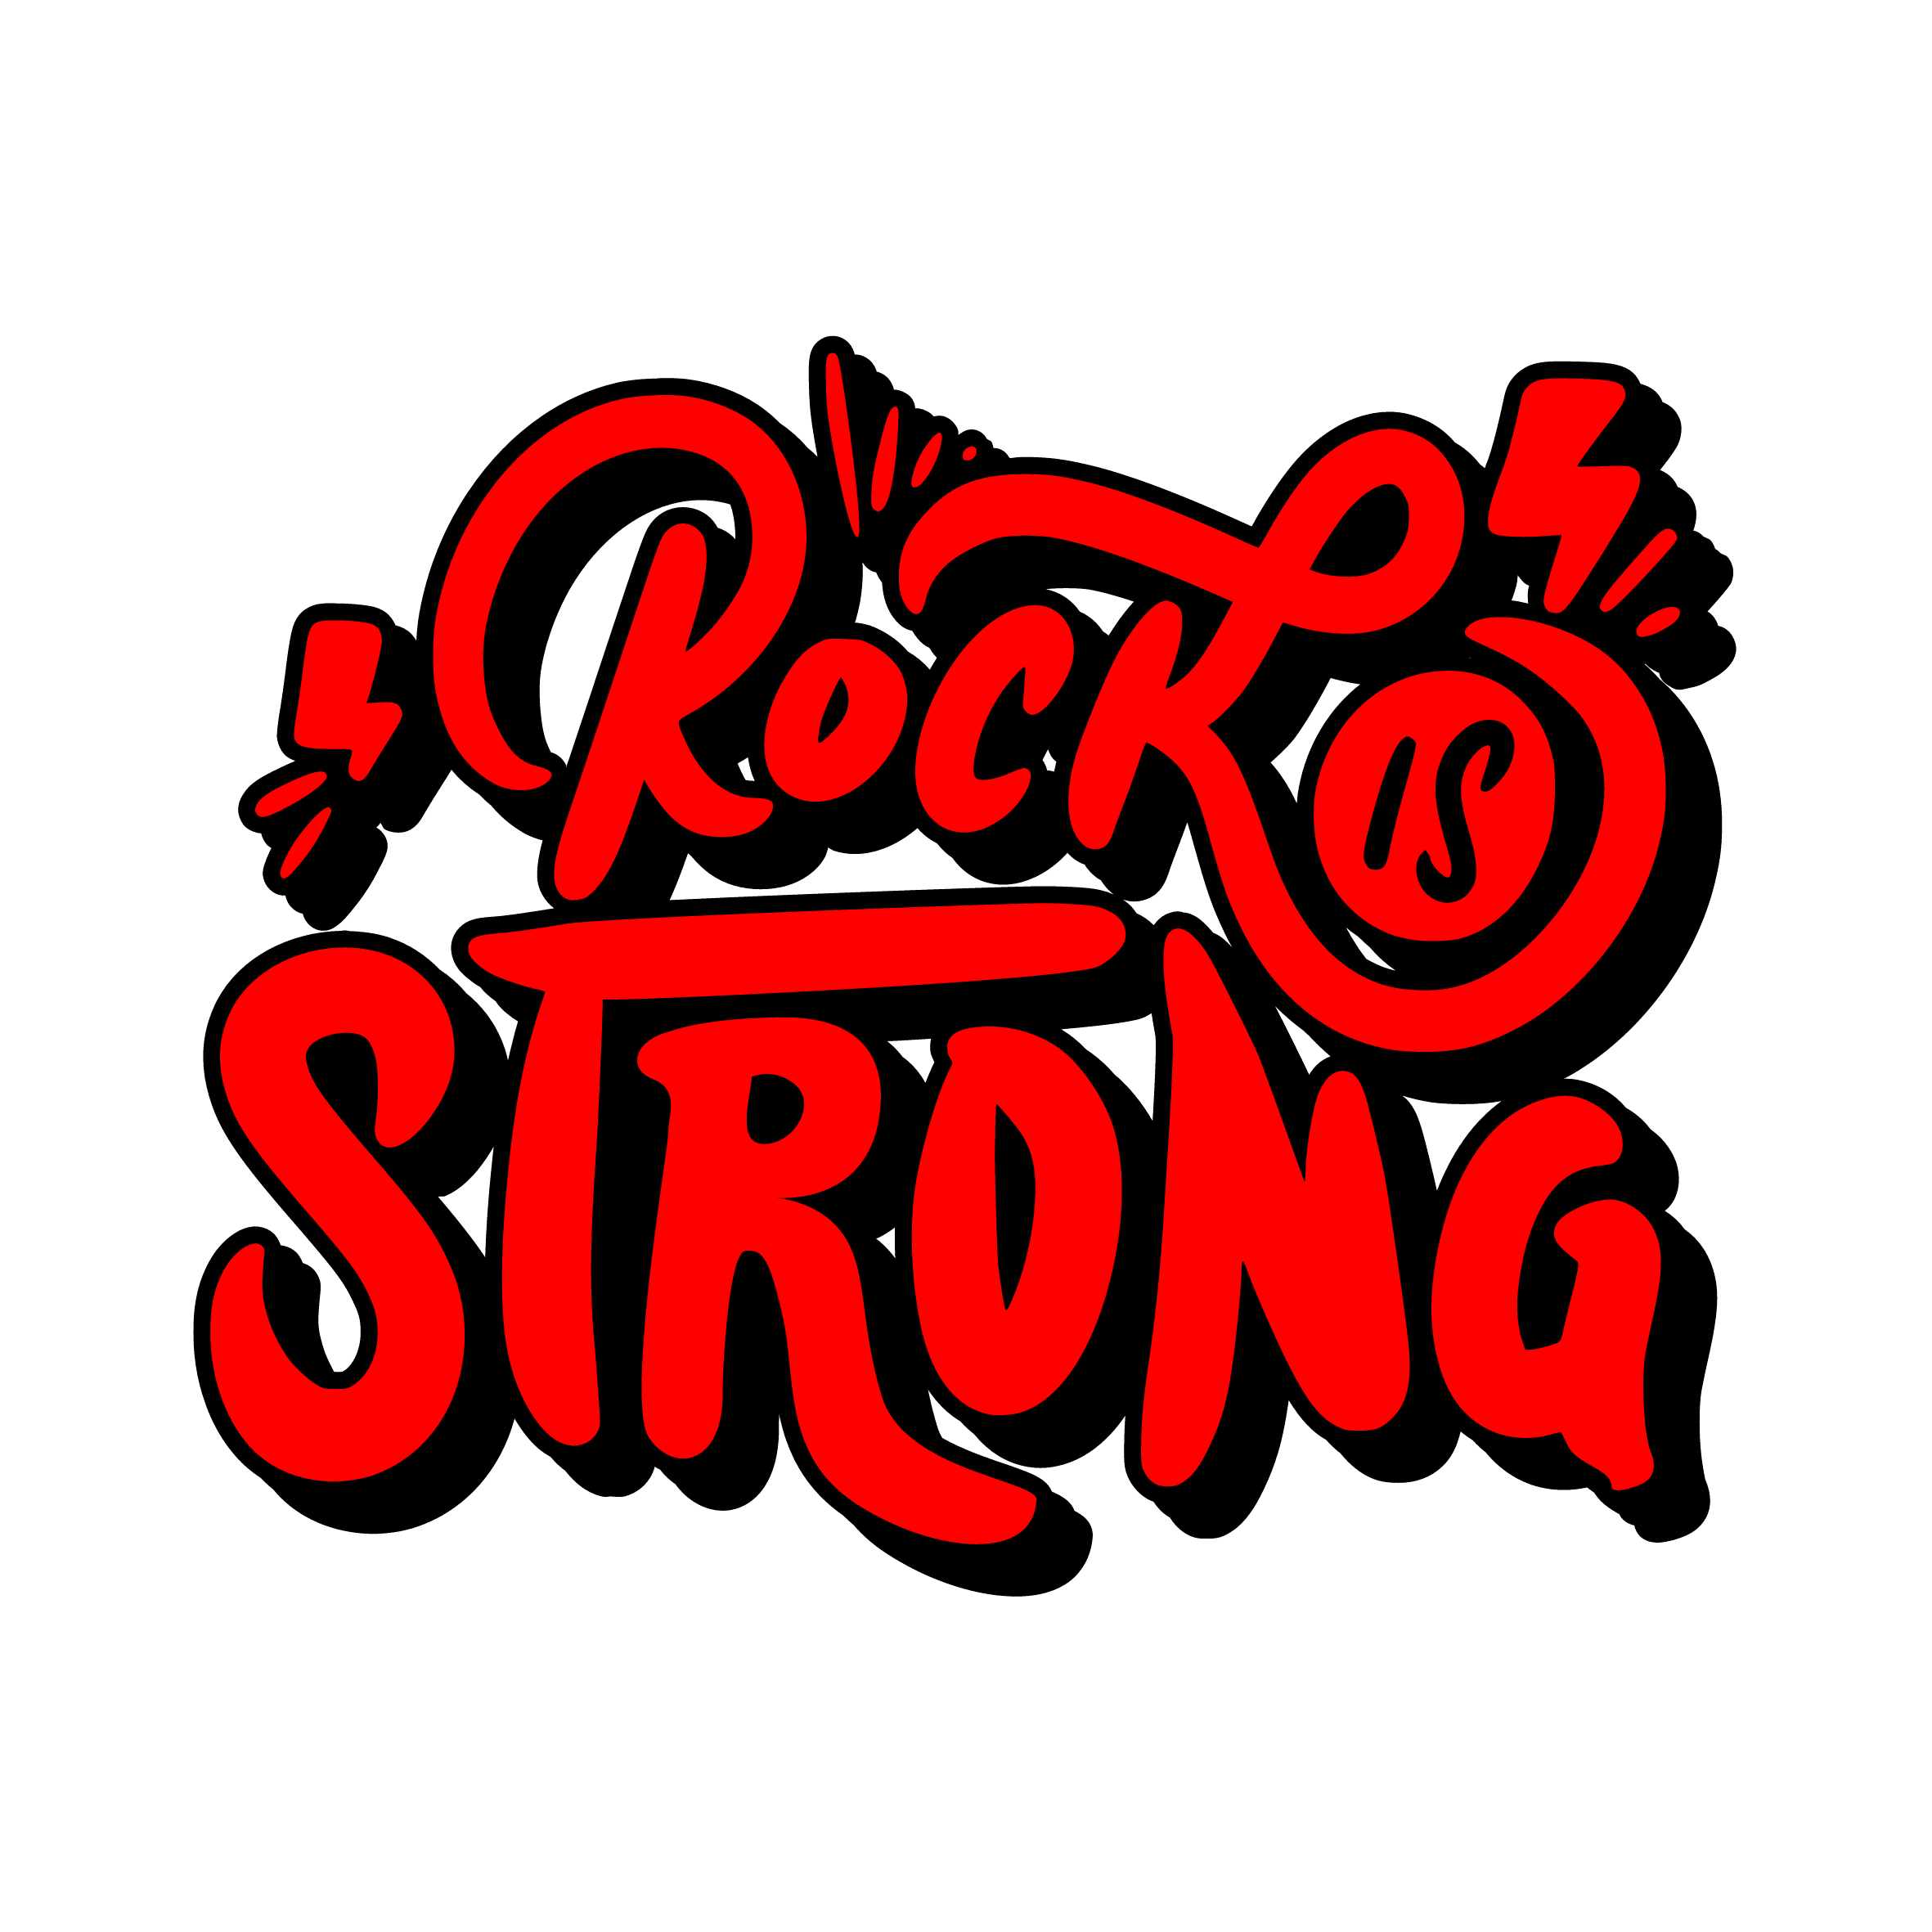 Rock is Strong sticker şeffaf 6cm